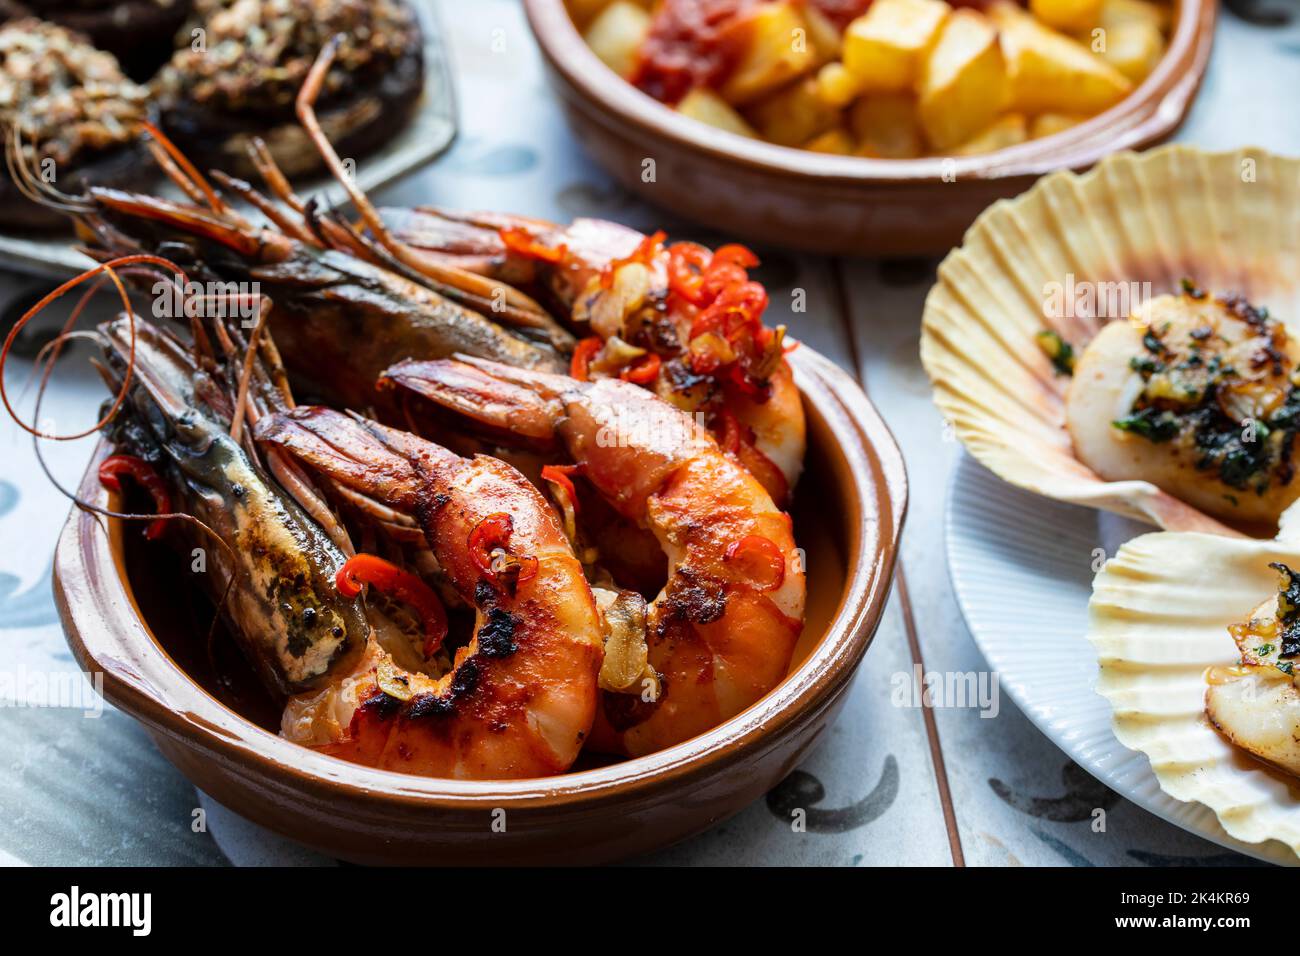 Traditional Spanish tapas selection Stock Photo